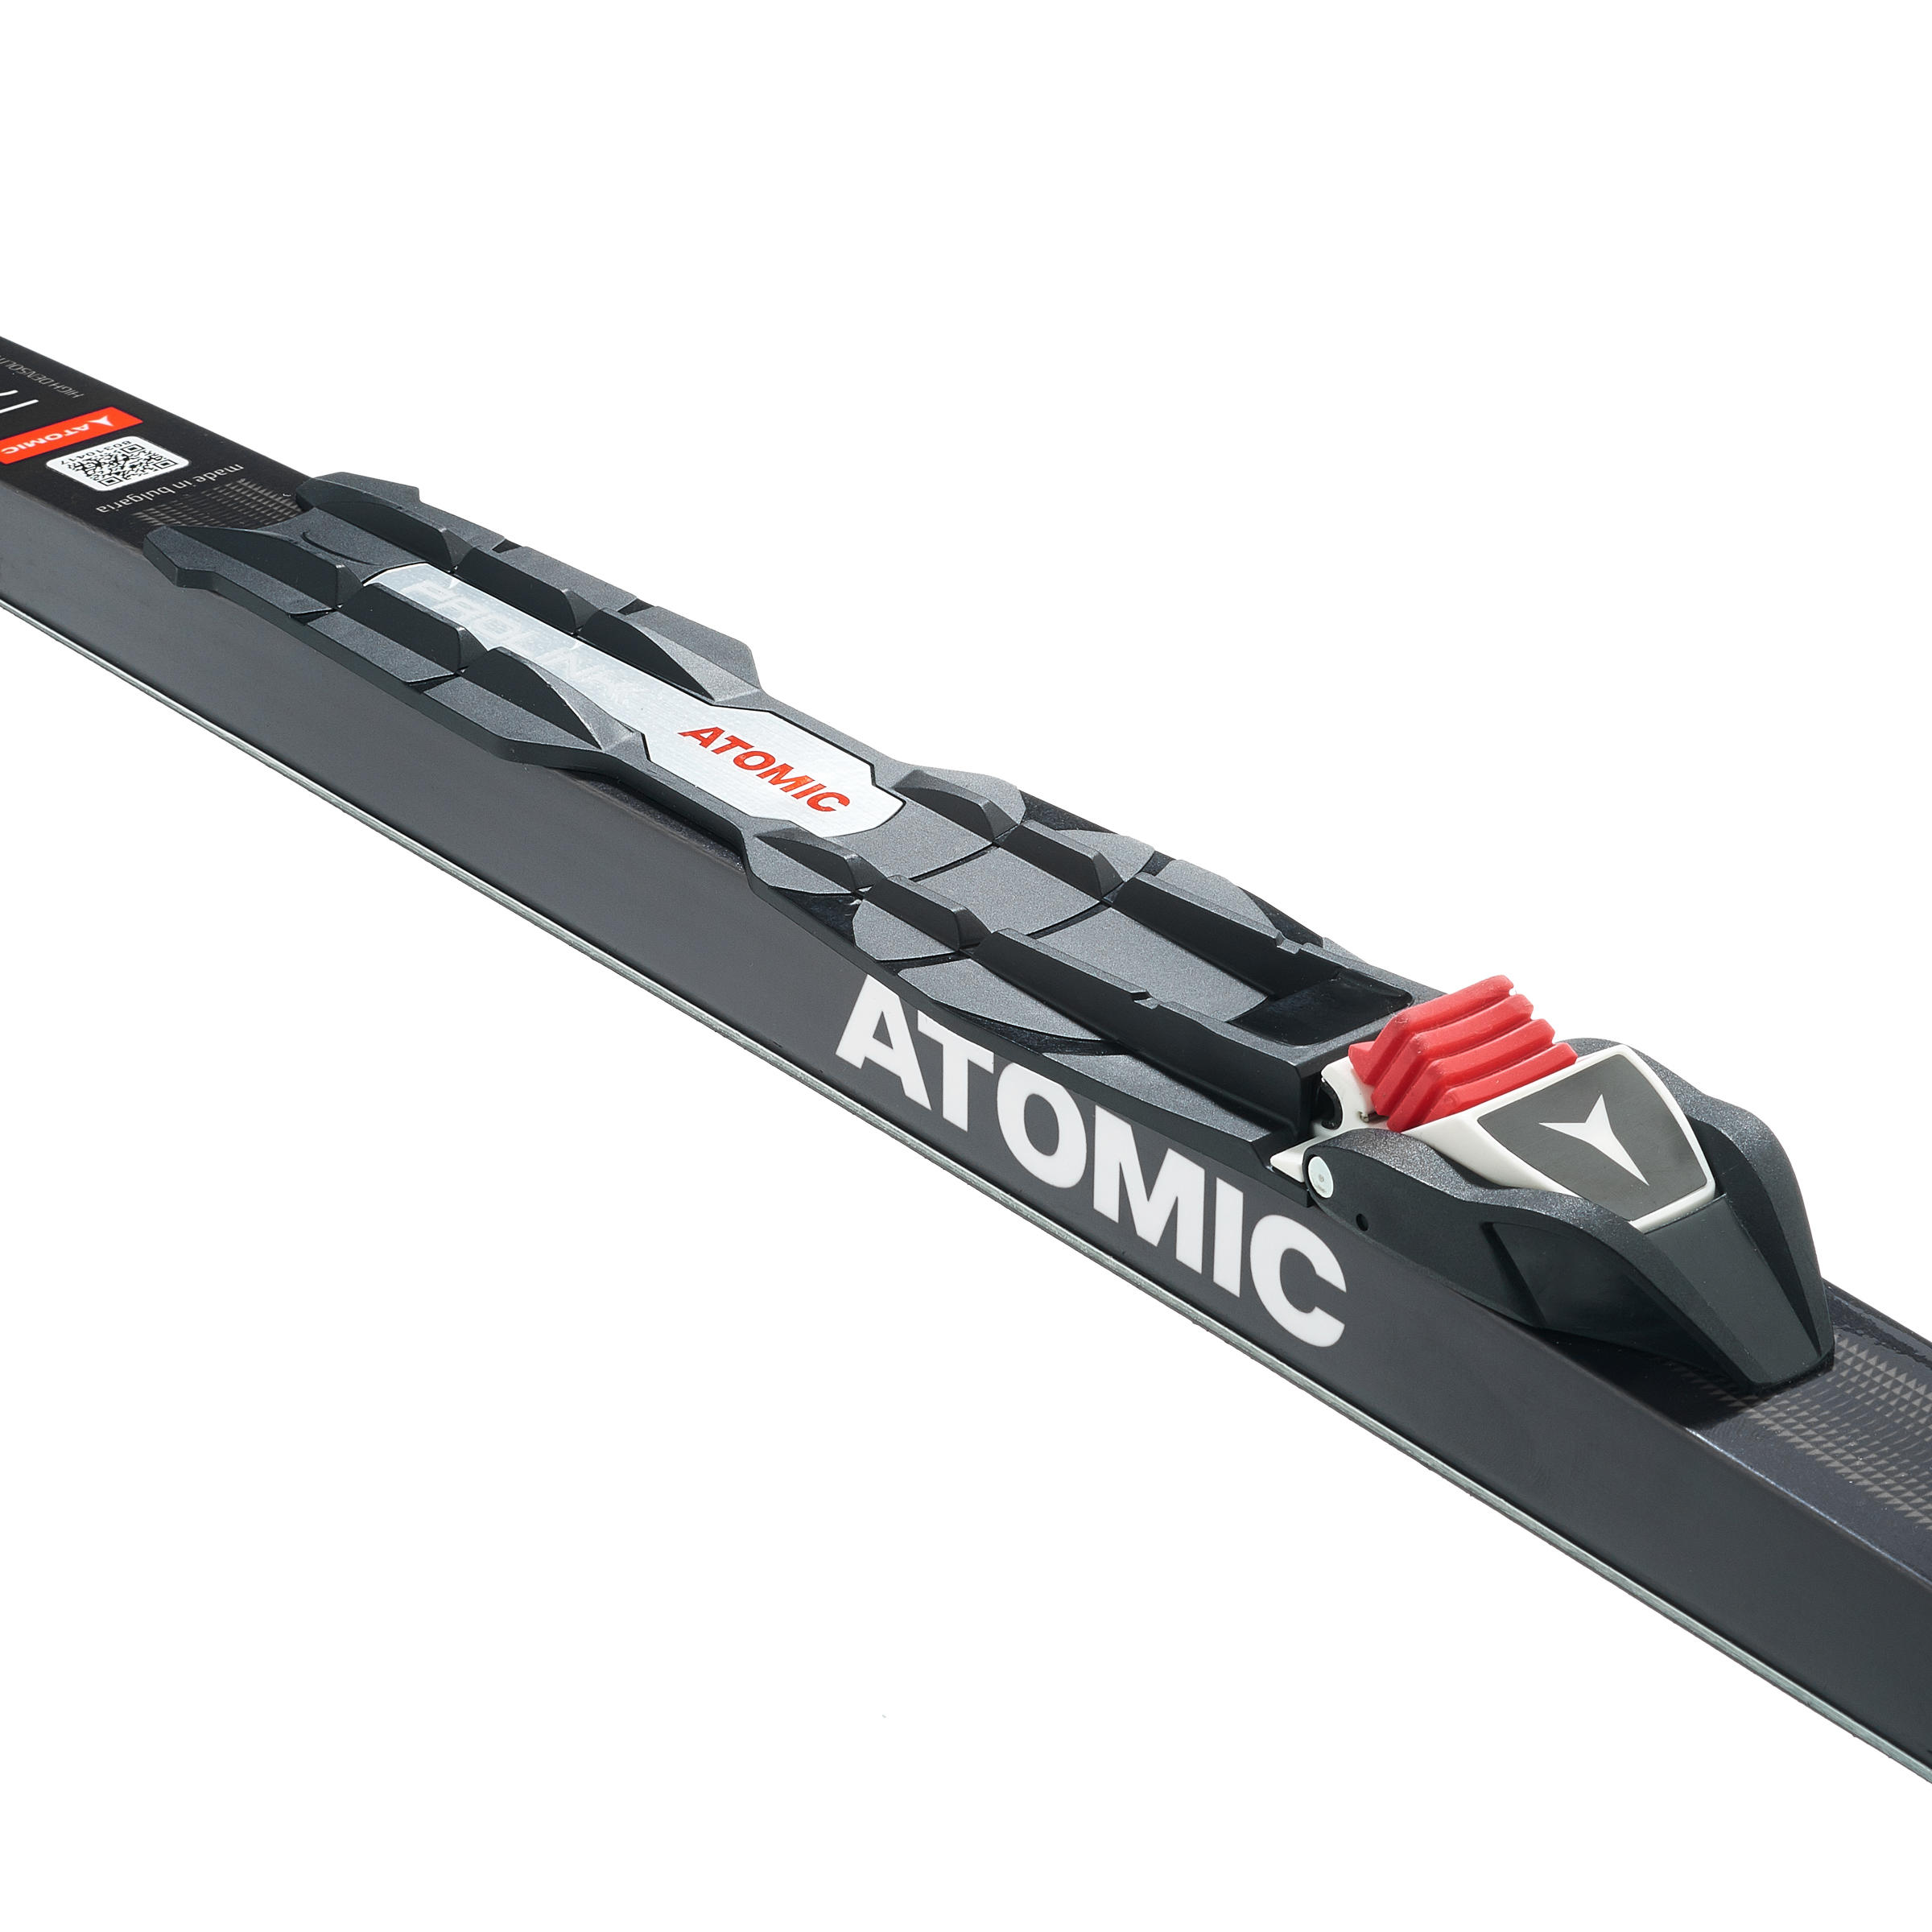 Atomic pro skate. Атомик s1 Pro Skate. Atomic s1 Pro Skate 190. Atomic Pro s1 172. Atomic Pro s1.